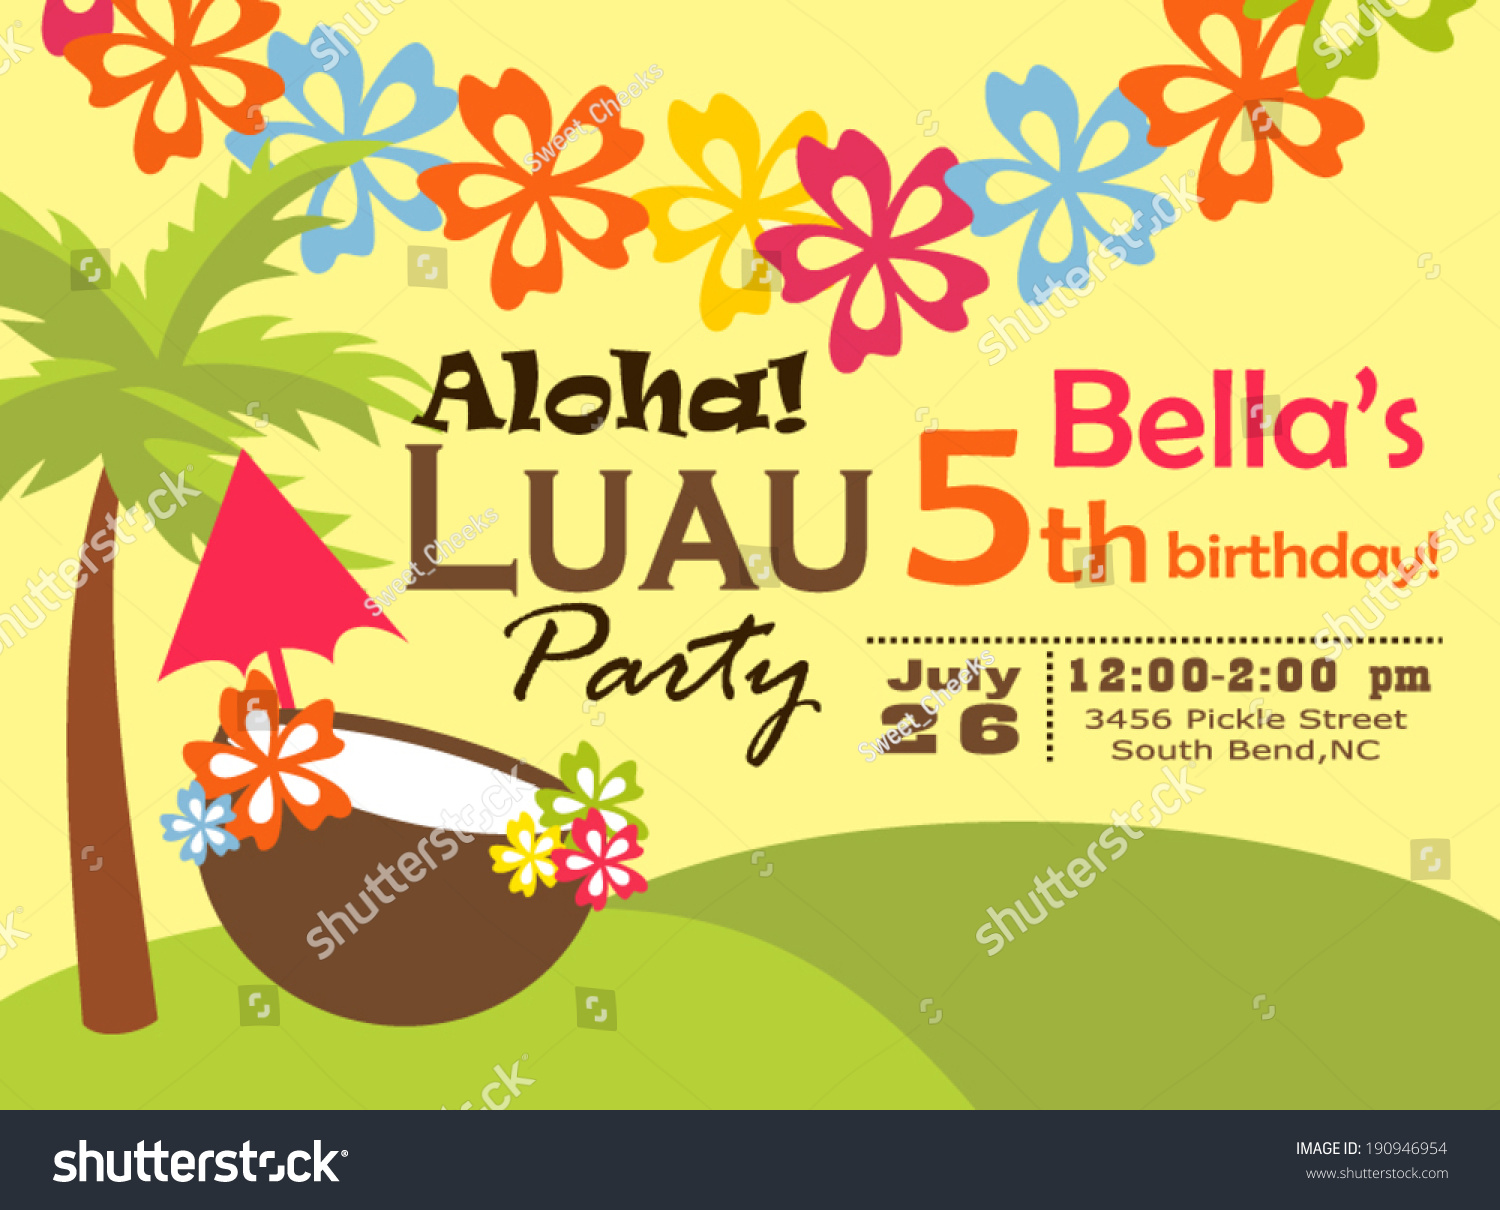 SVG of Luau Party invitation svg